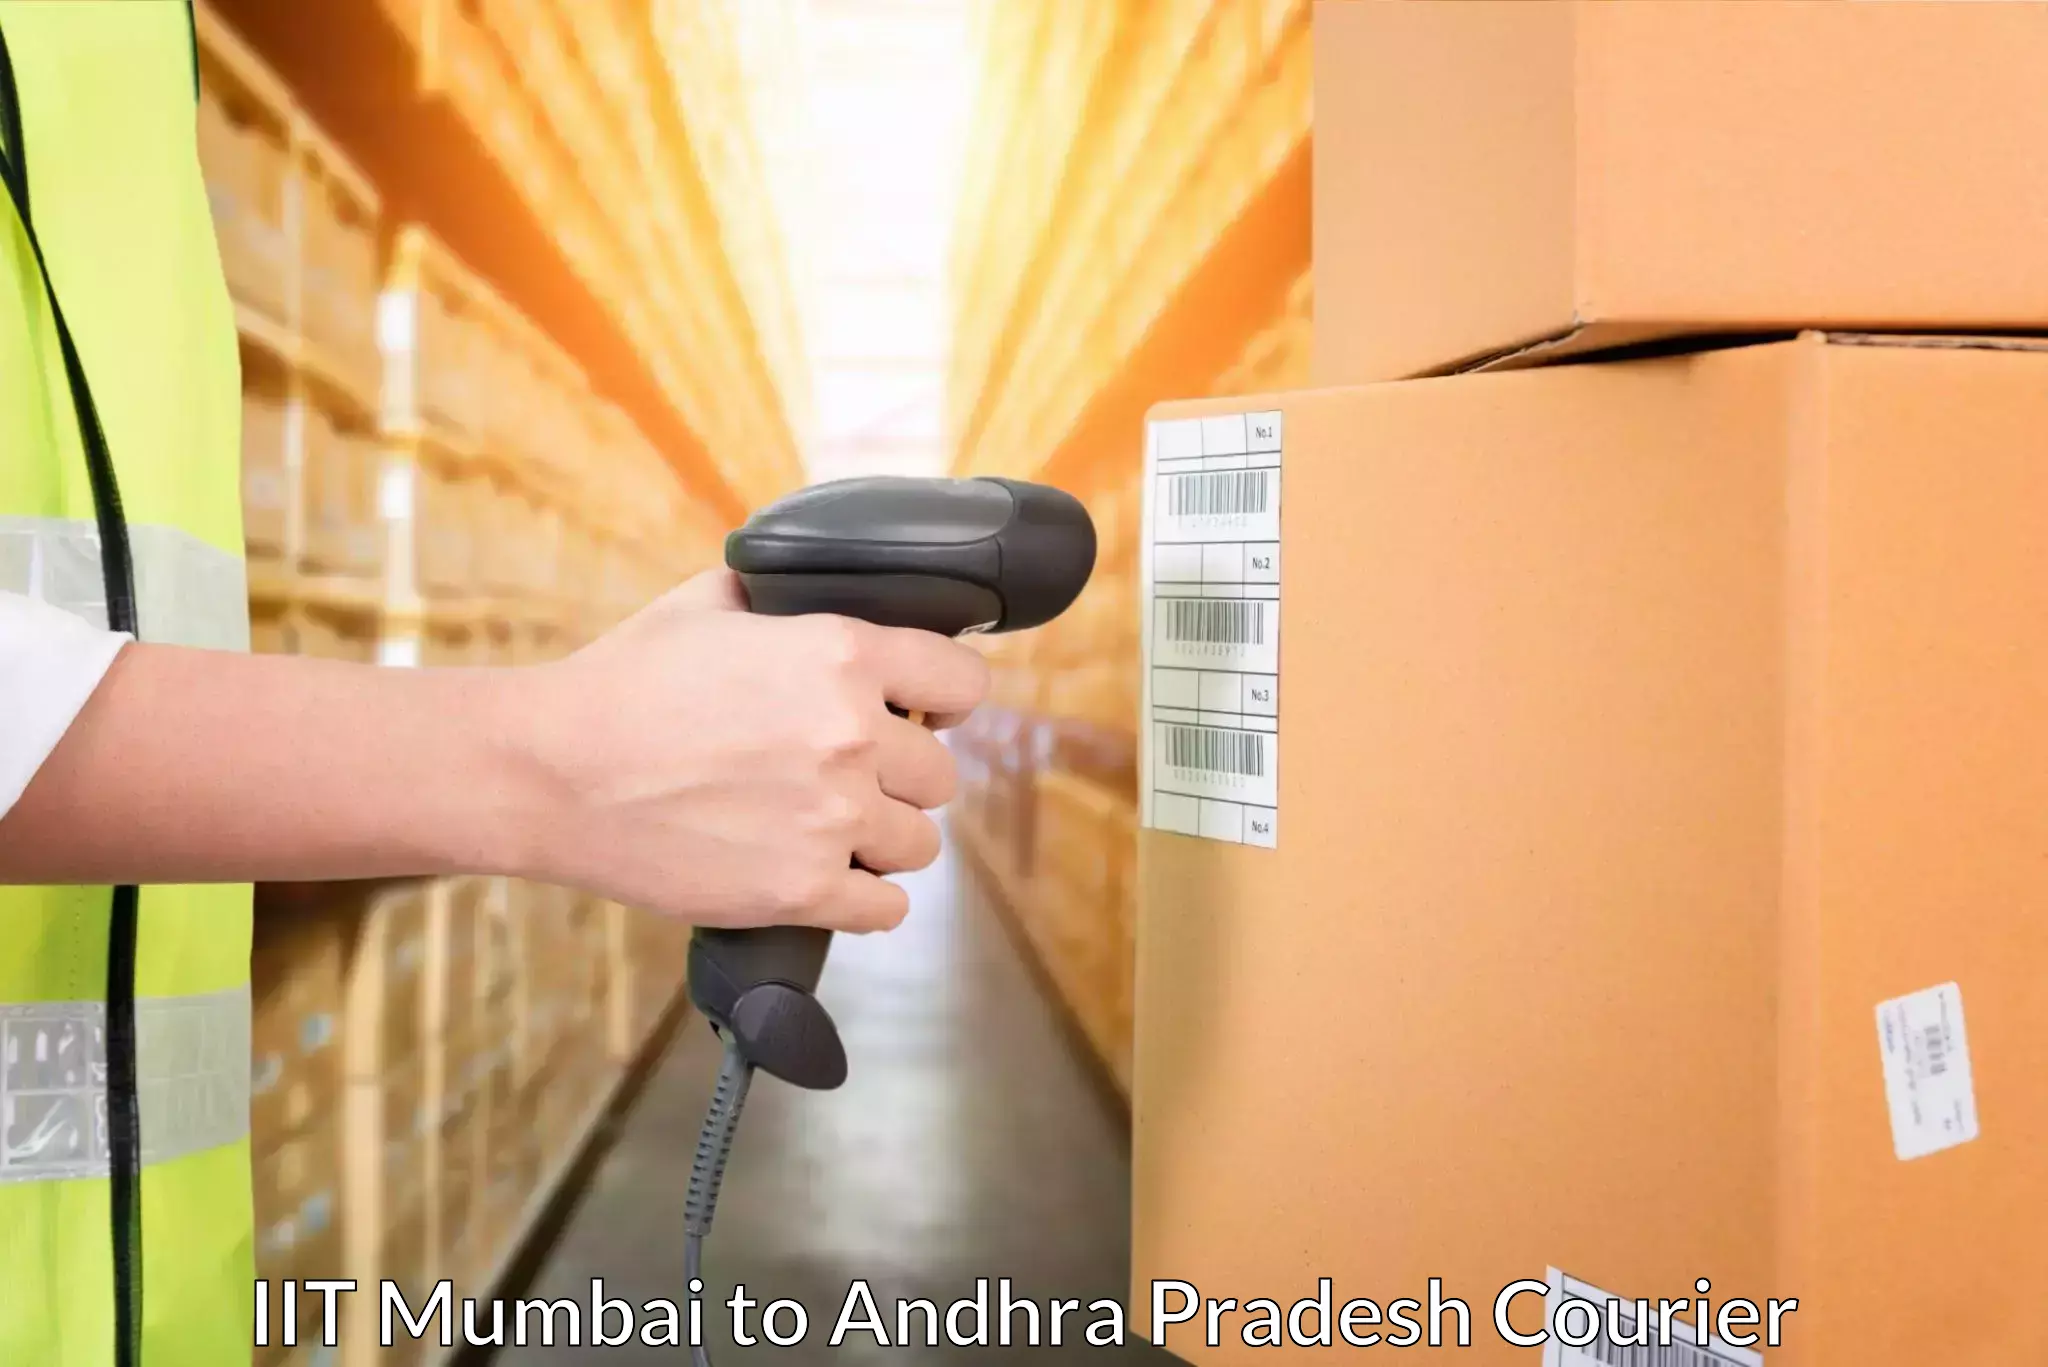 Speedy delivery service IIT Mumbai to Malikipuram